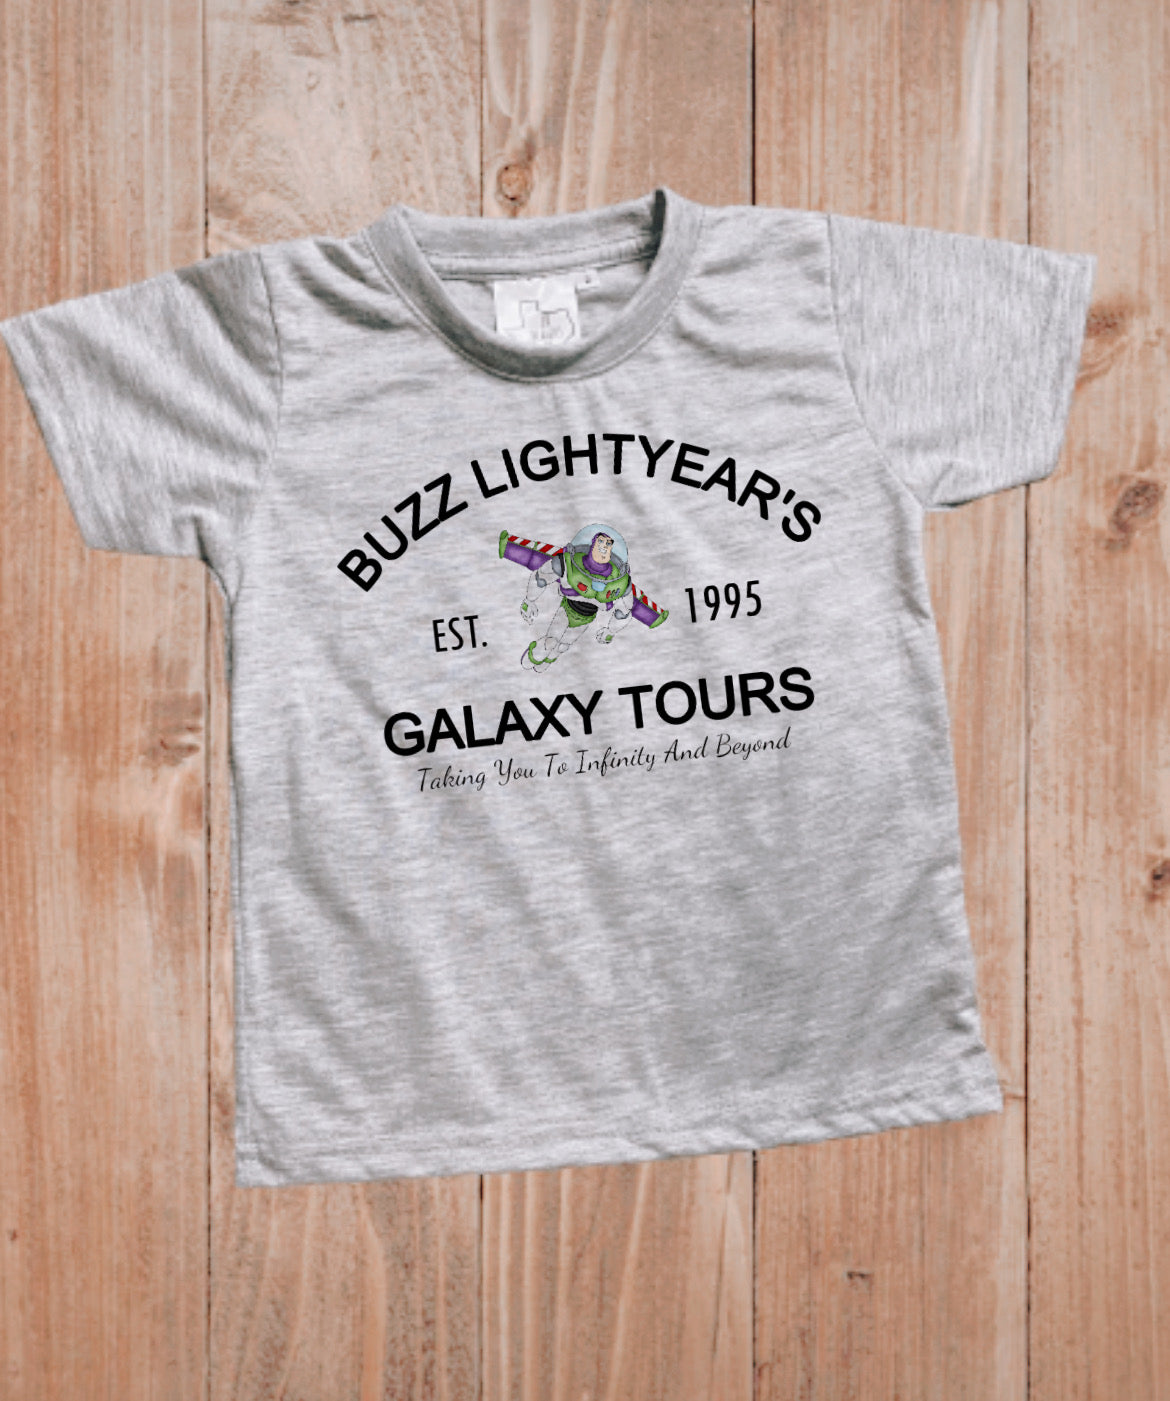 Galaxy Tours